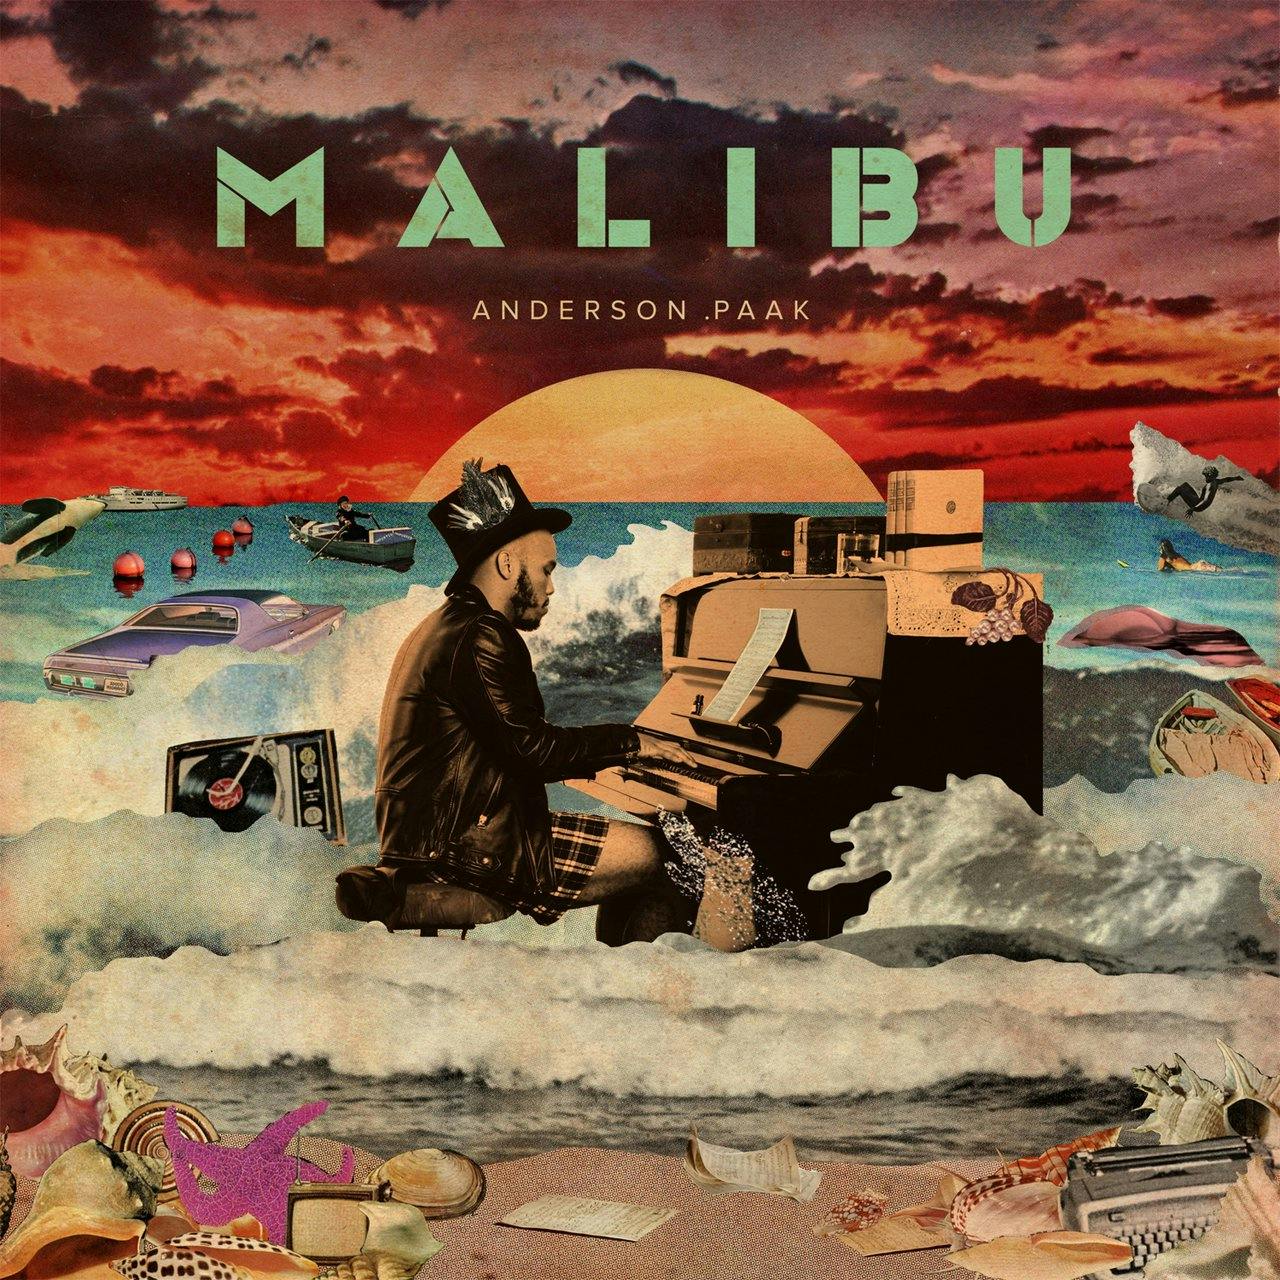 Malibu album cover by Anderson .Paak.